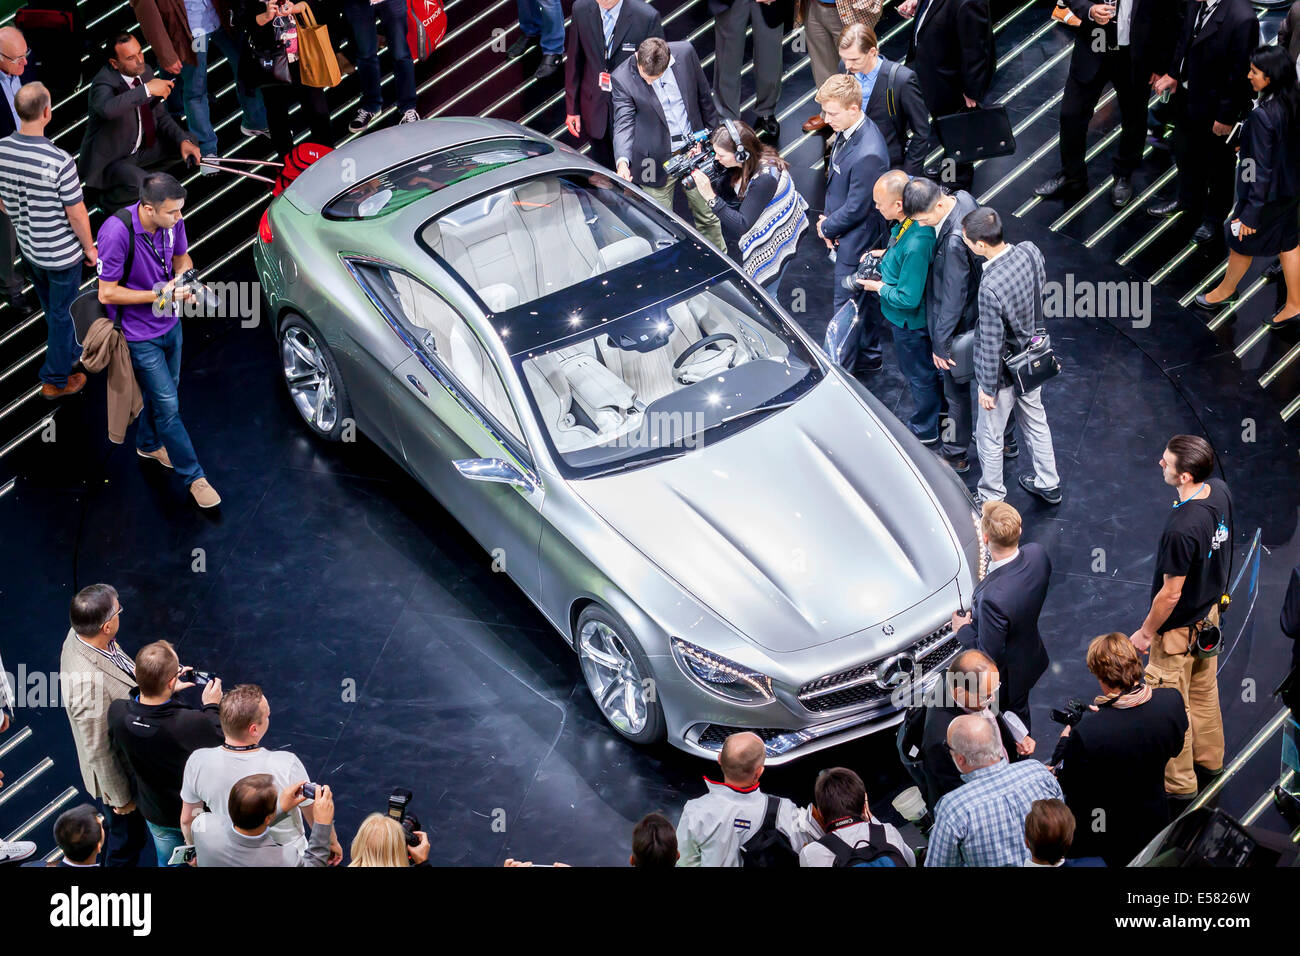 Premiere mondiale della Mercedes Classe S Coupe, 65th International Motor Show IAA 2013, Frankfurt am Main, Hesse, Germania Foto Stock